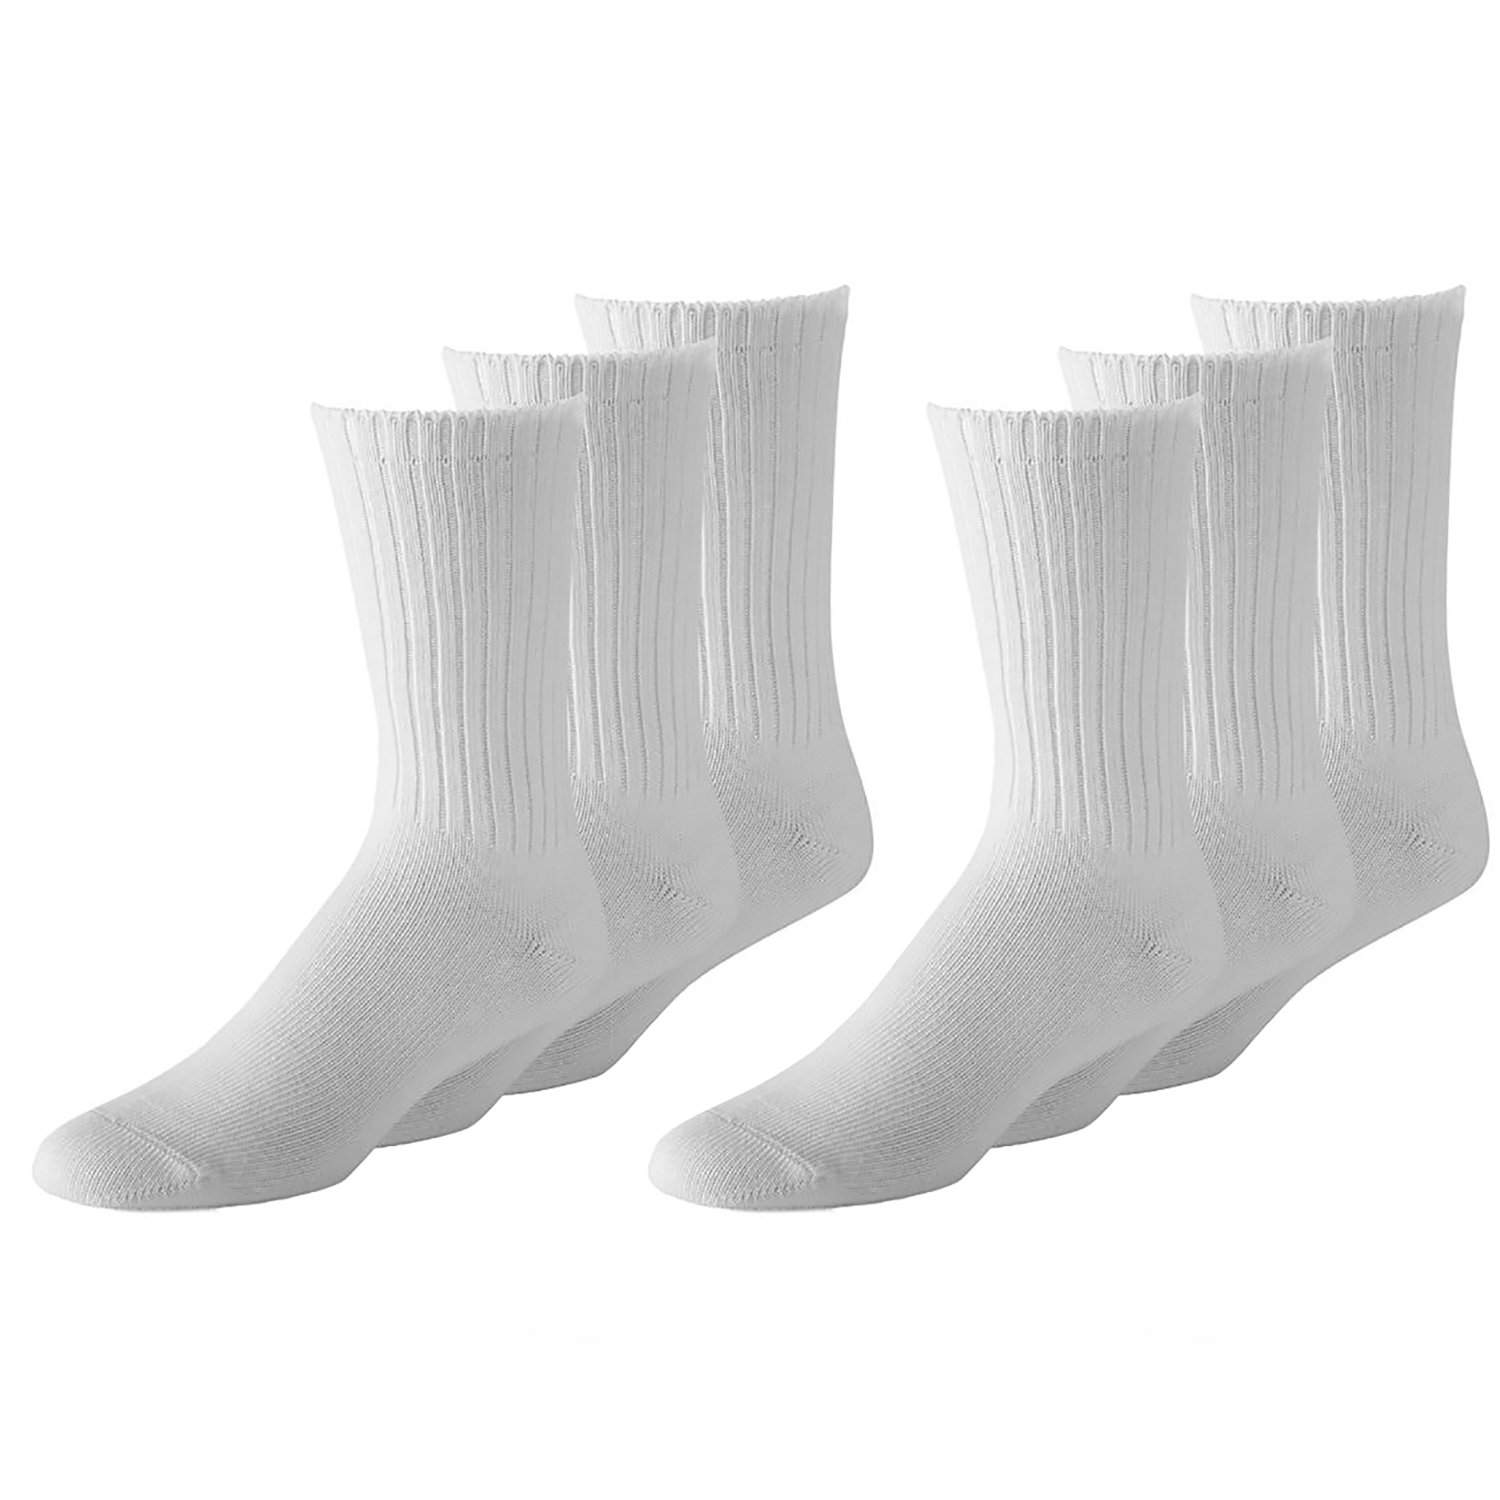 Unisex Crew Athletic Sports Cotton Socks  60 Pack